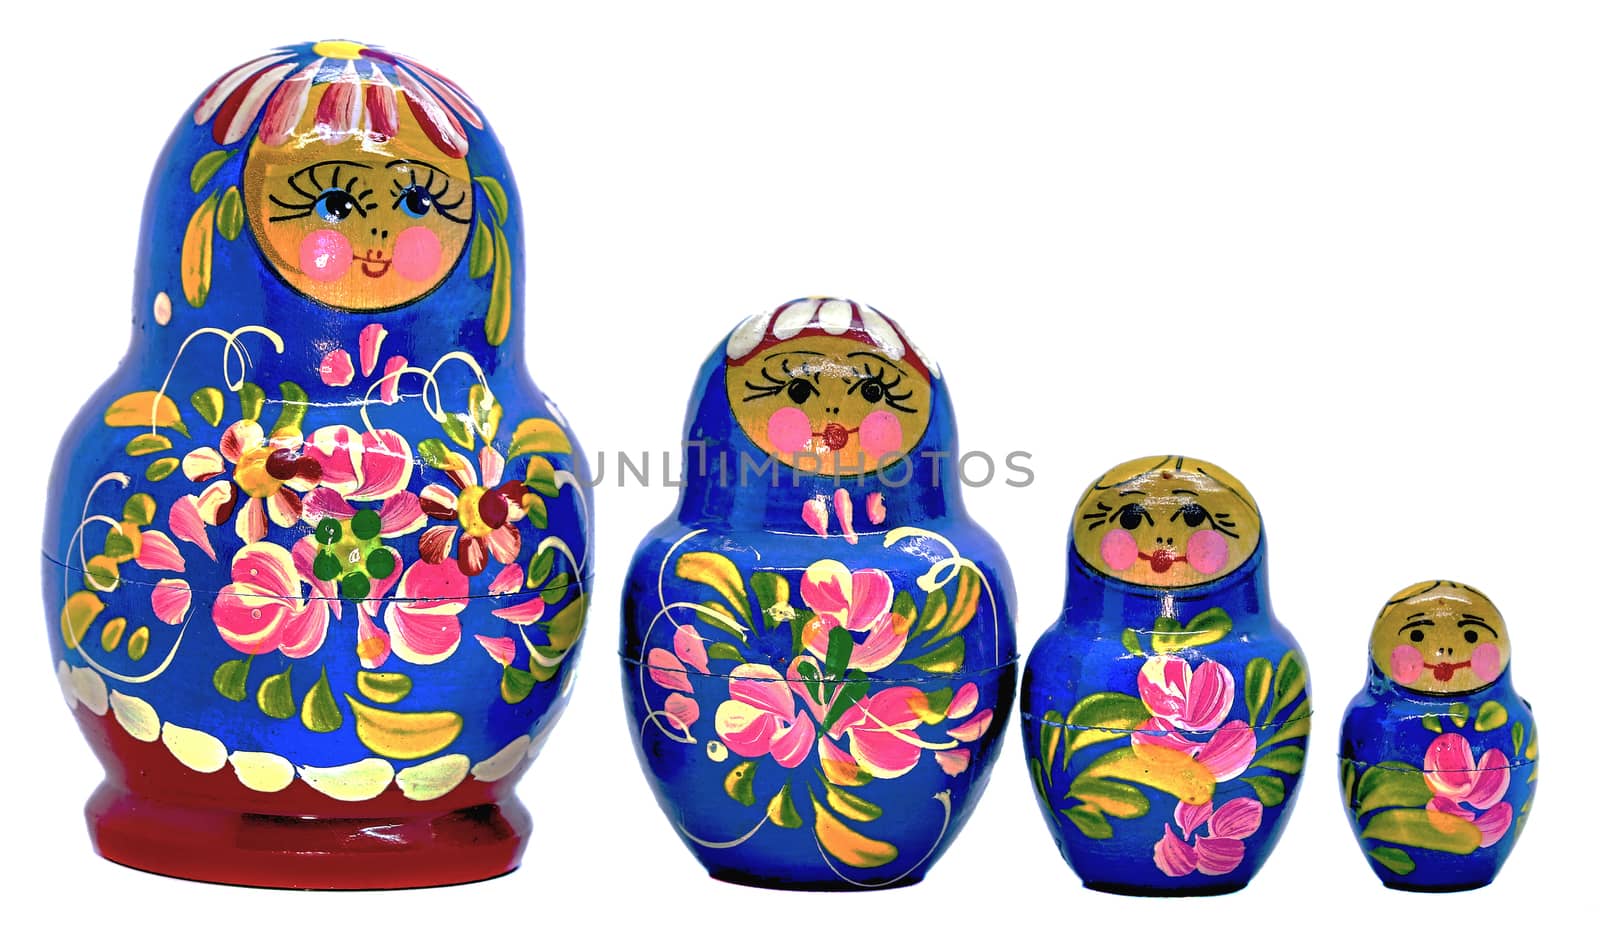 Blue Matryoshka, Russian dolls on white Background by gstalker